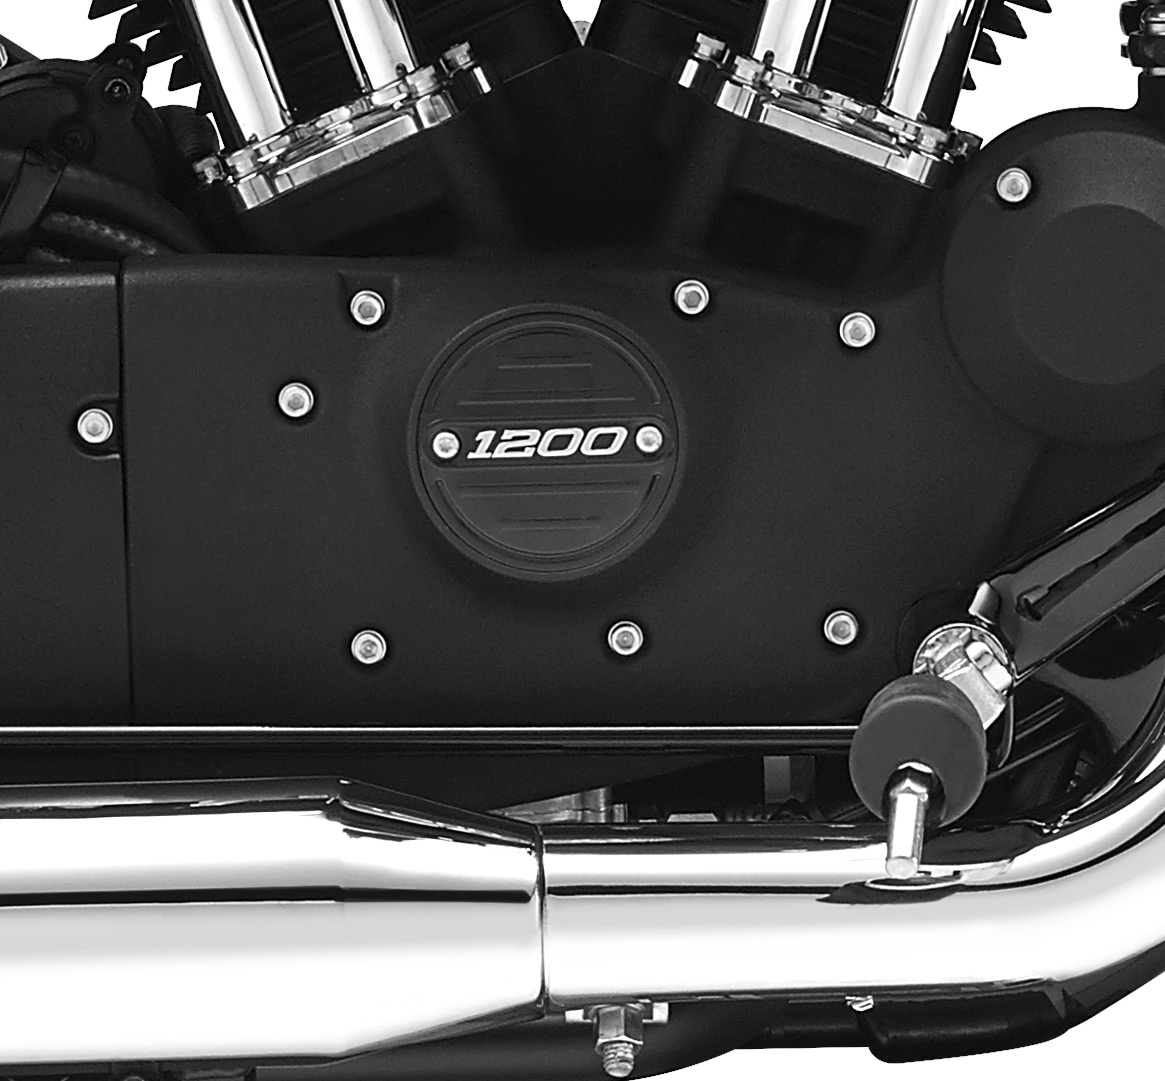 25600048 Harley Davidson Original Timer Cover 1200 For Xl1200x Xs Ns 16 19 At Thunderbike Shop